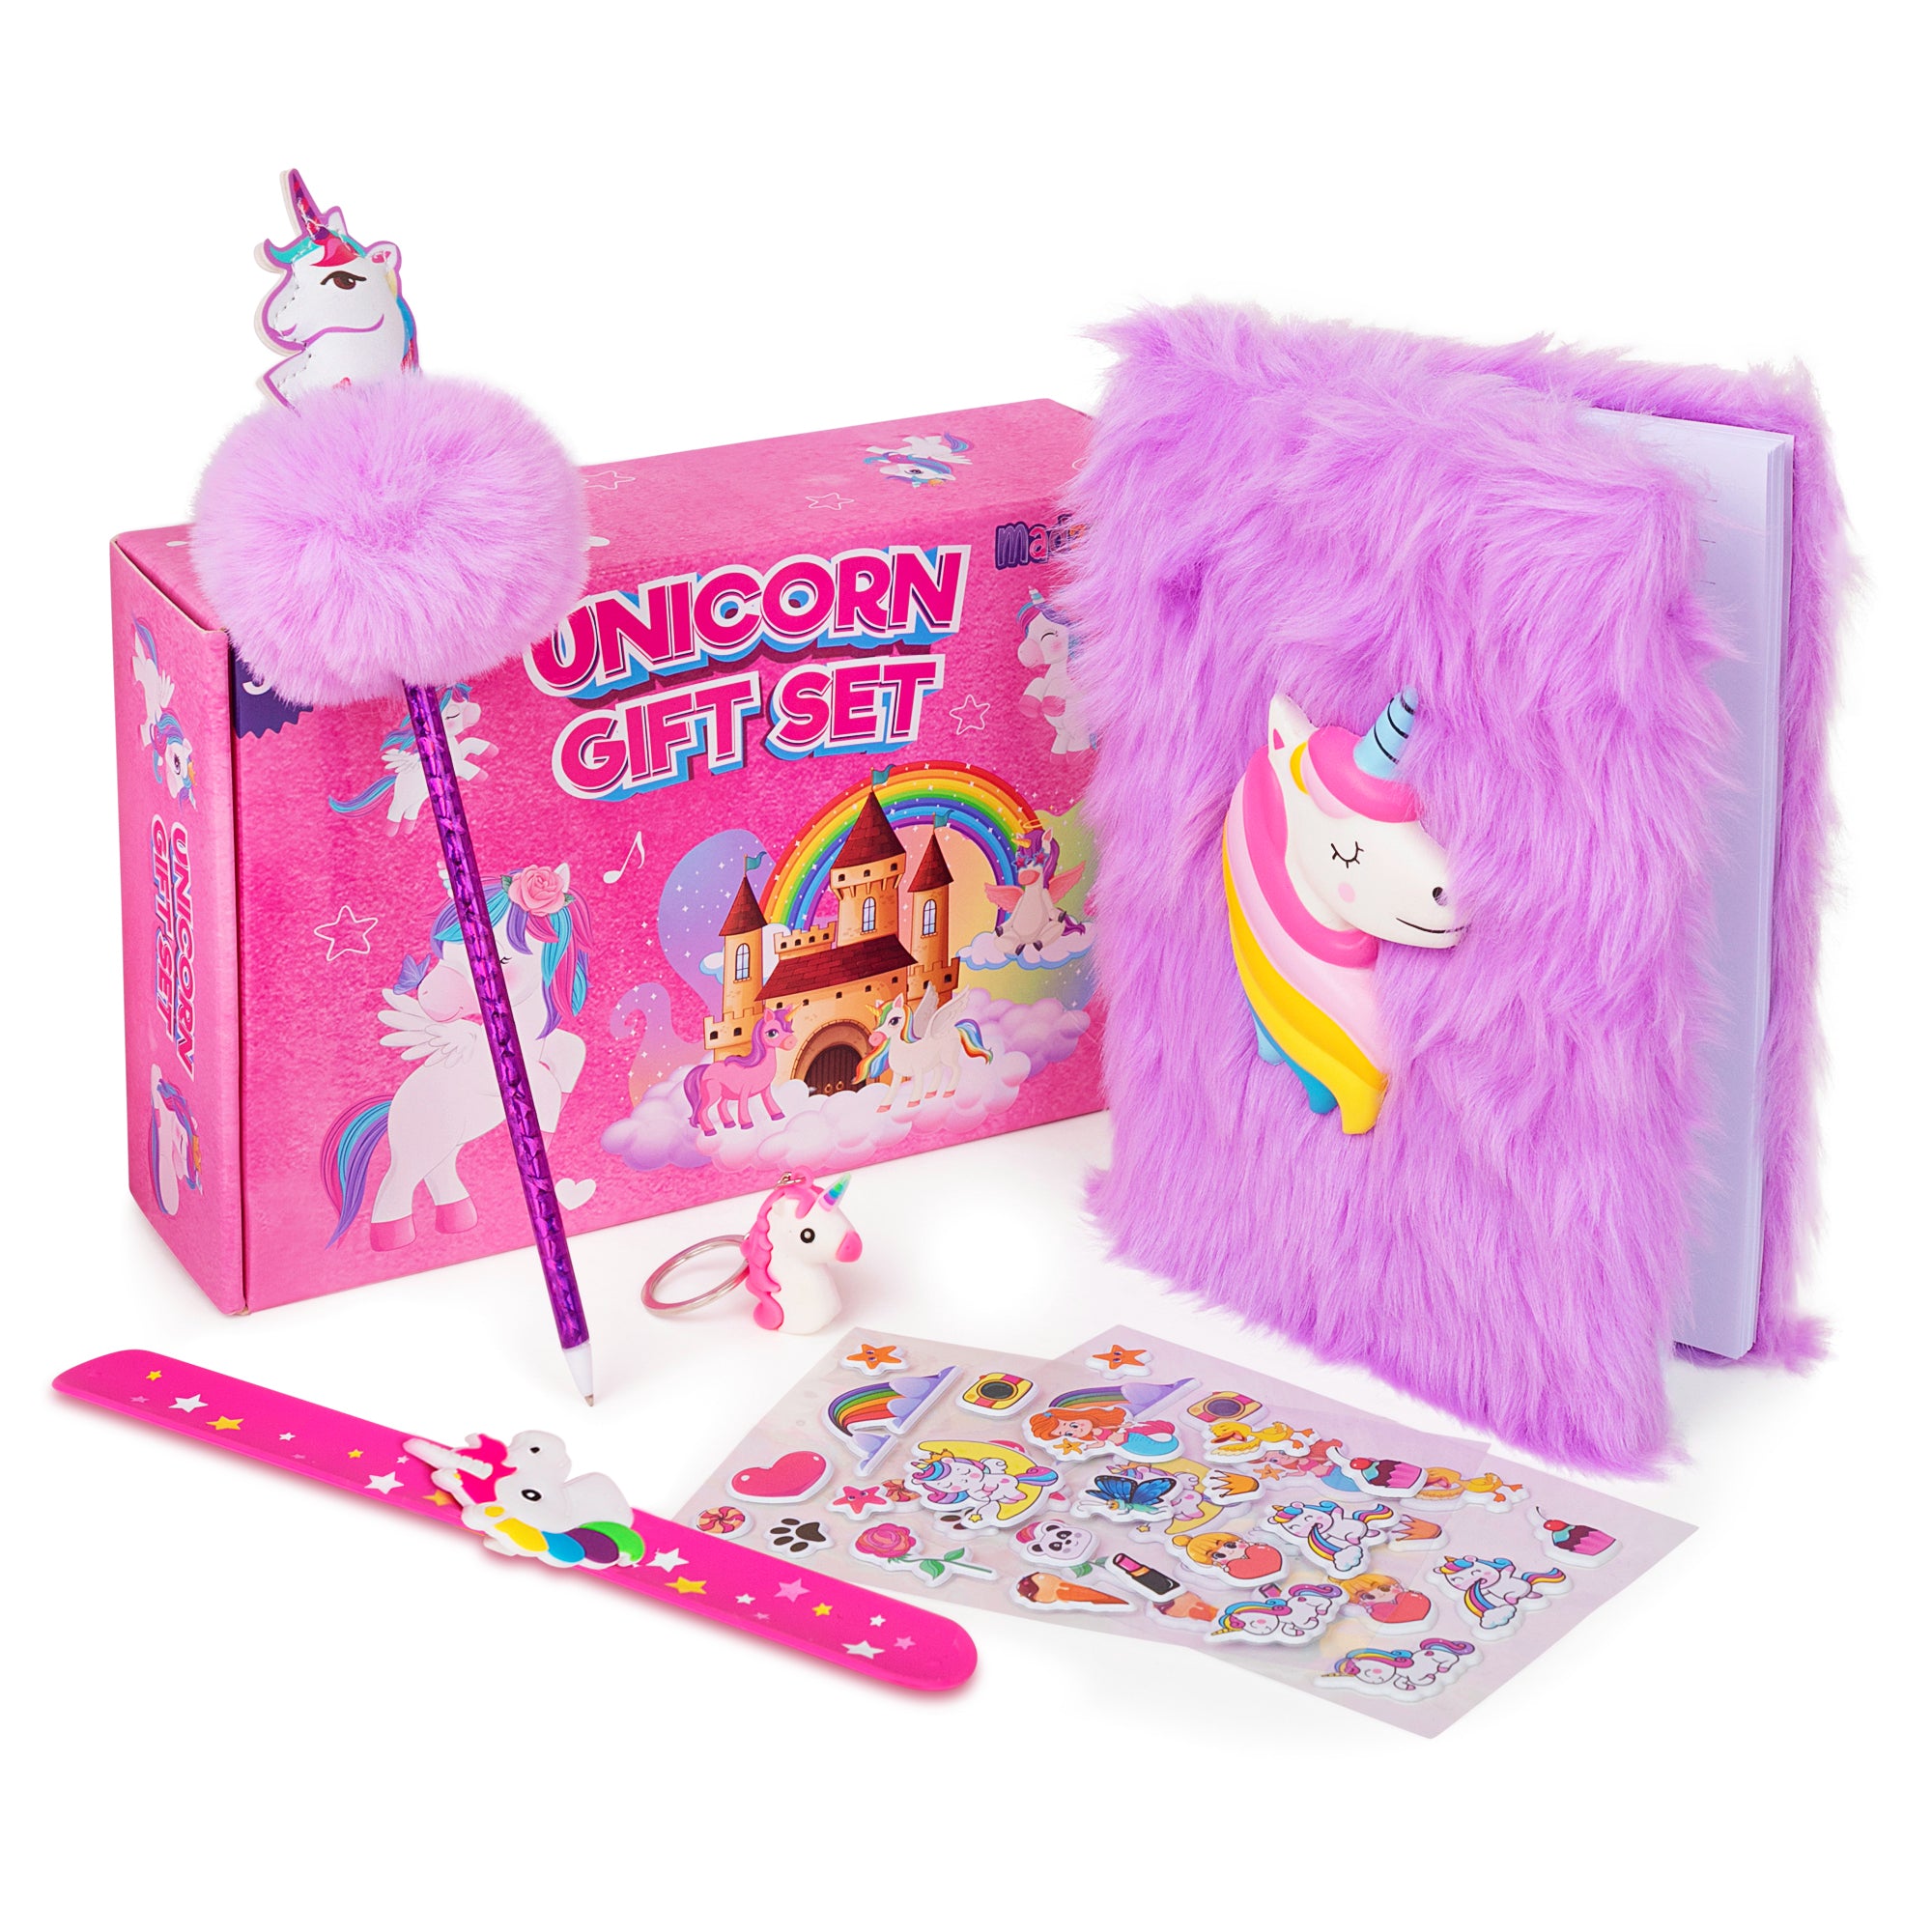 Toys League Unicorn Stationery Gift Set at Rs 145.00